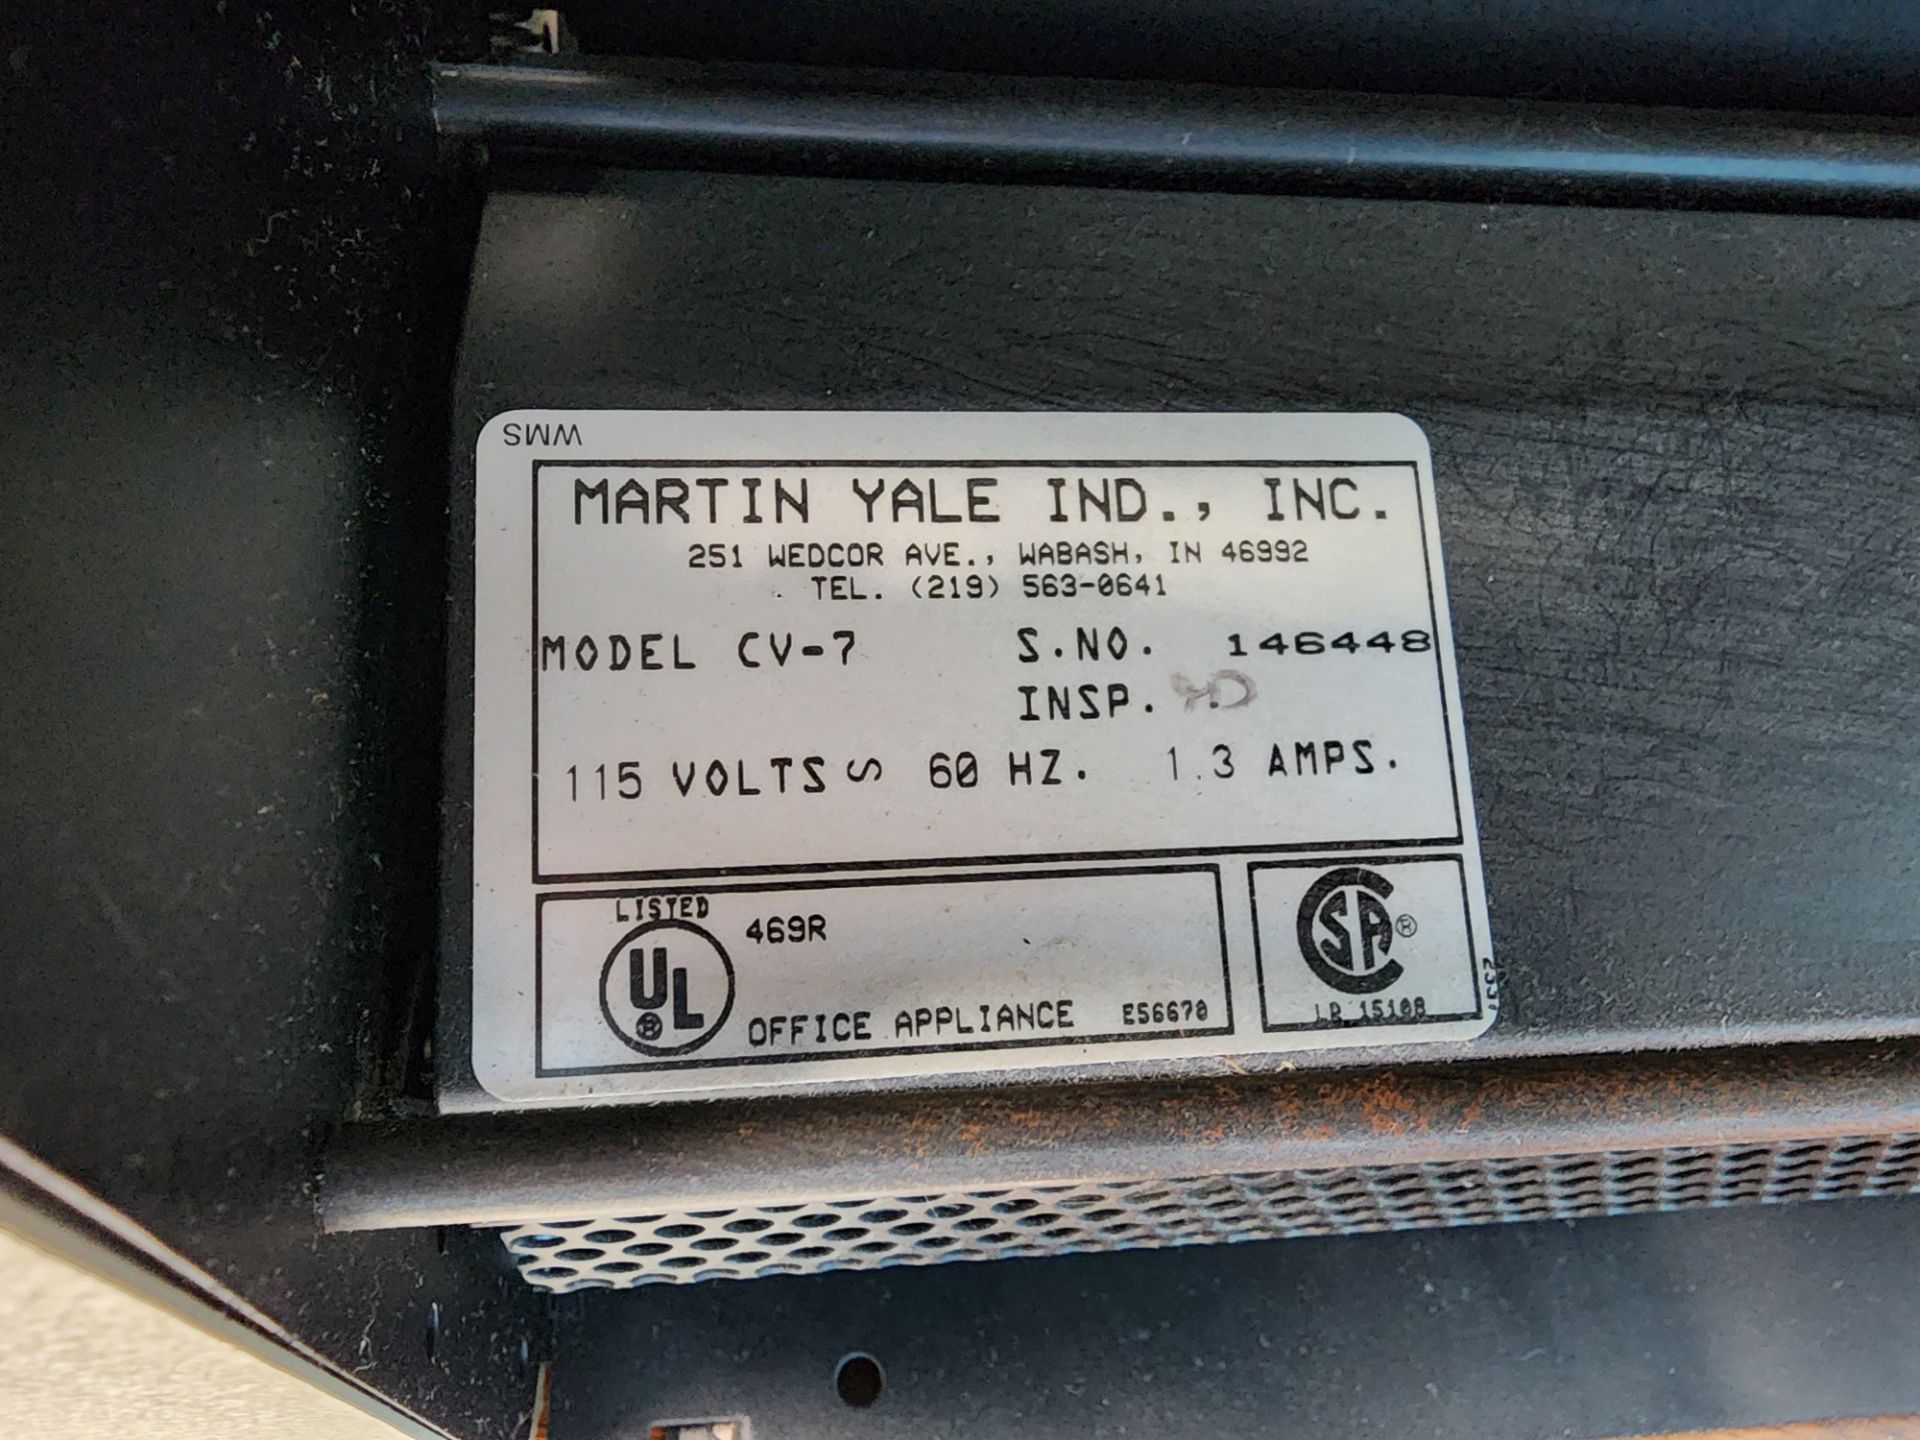 Martin Yale Model CV-7 Auto Folder, S/N 146448 - Image 2 of 7